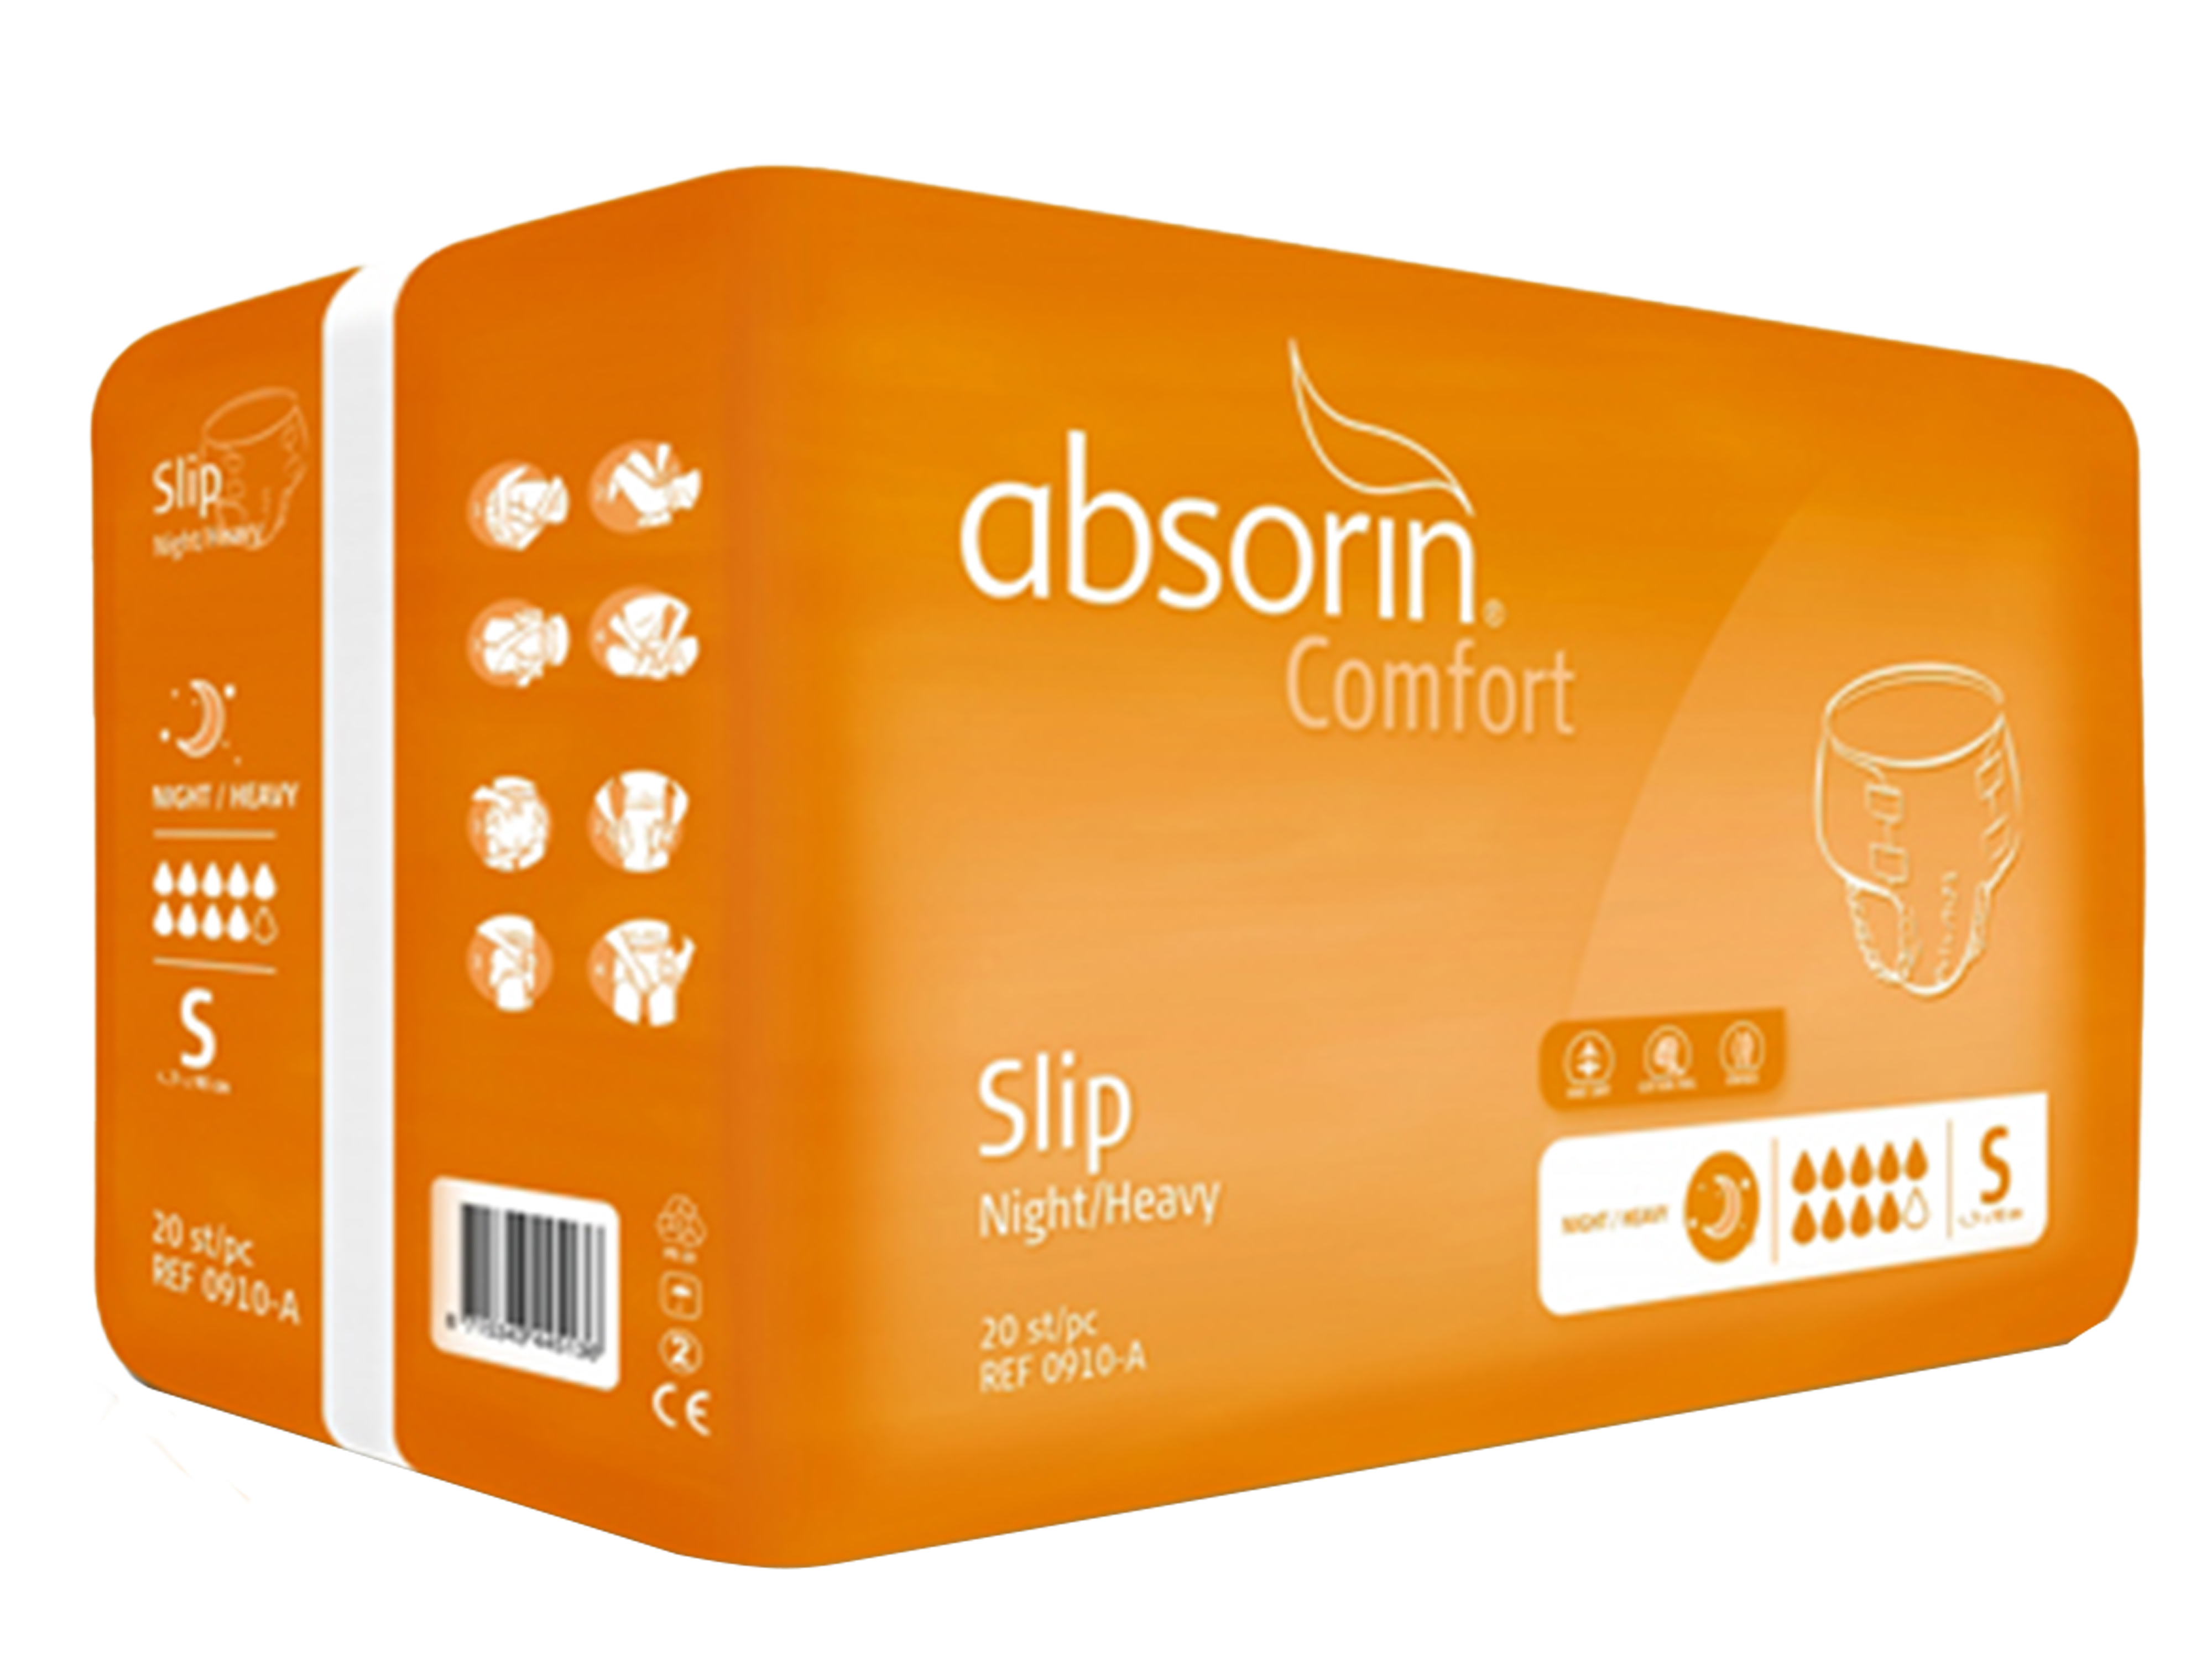 Absorin Comfort Slip Night/Heavy str S, str S, 20 stk.